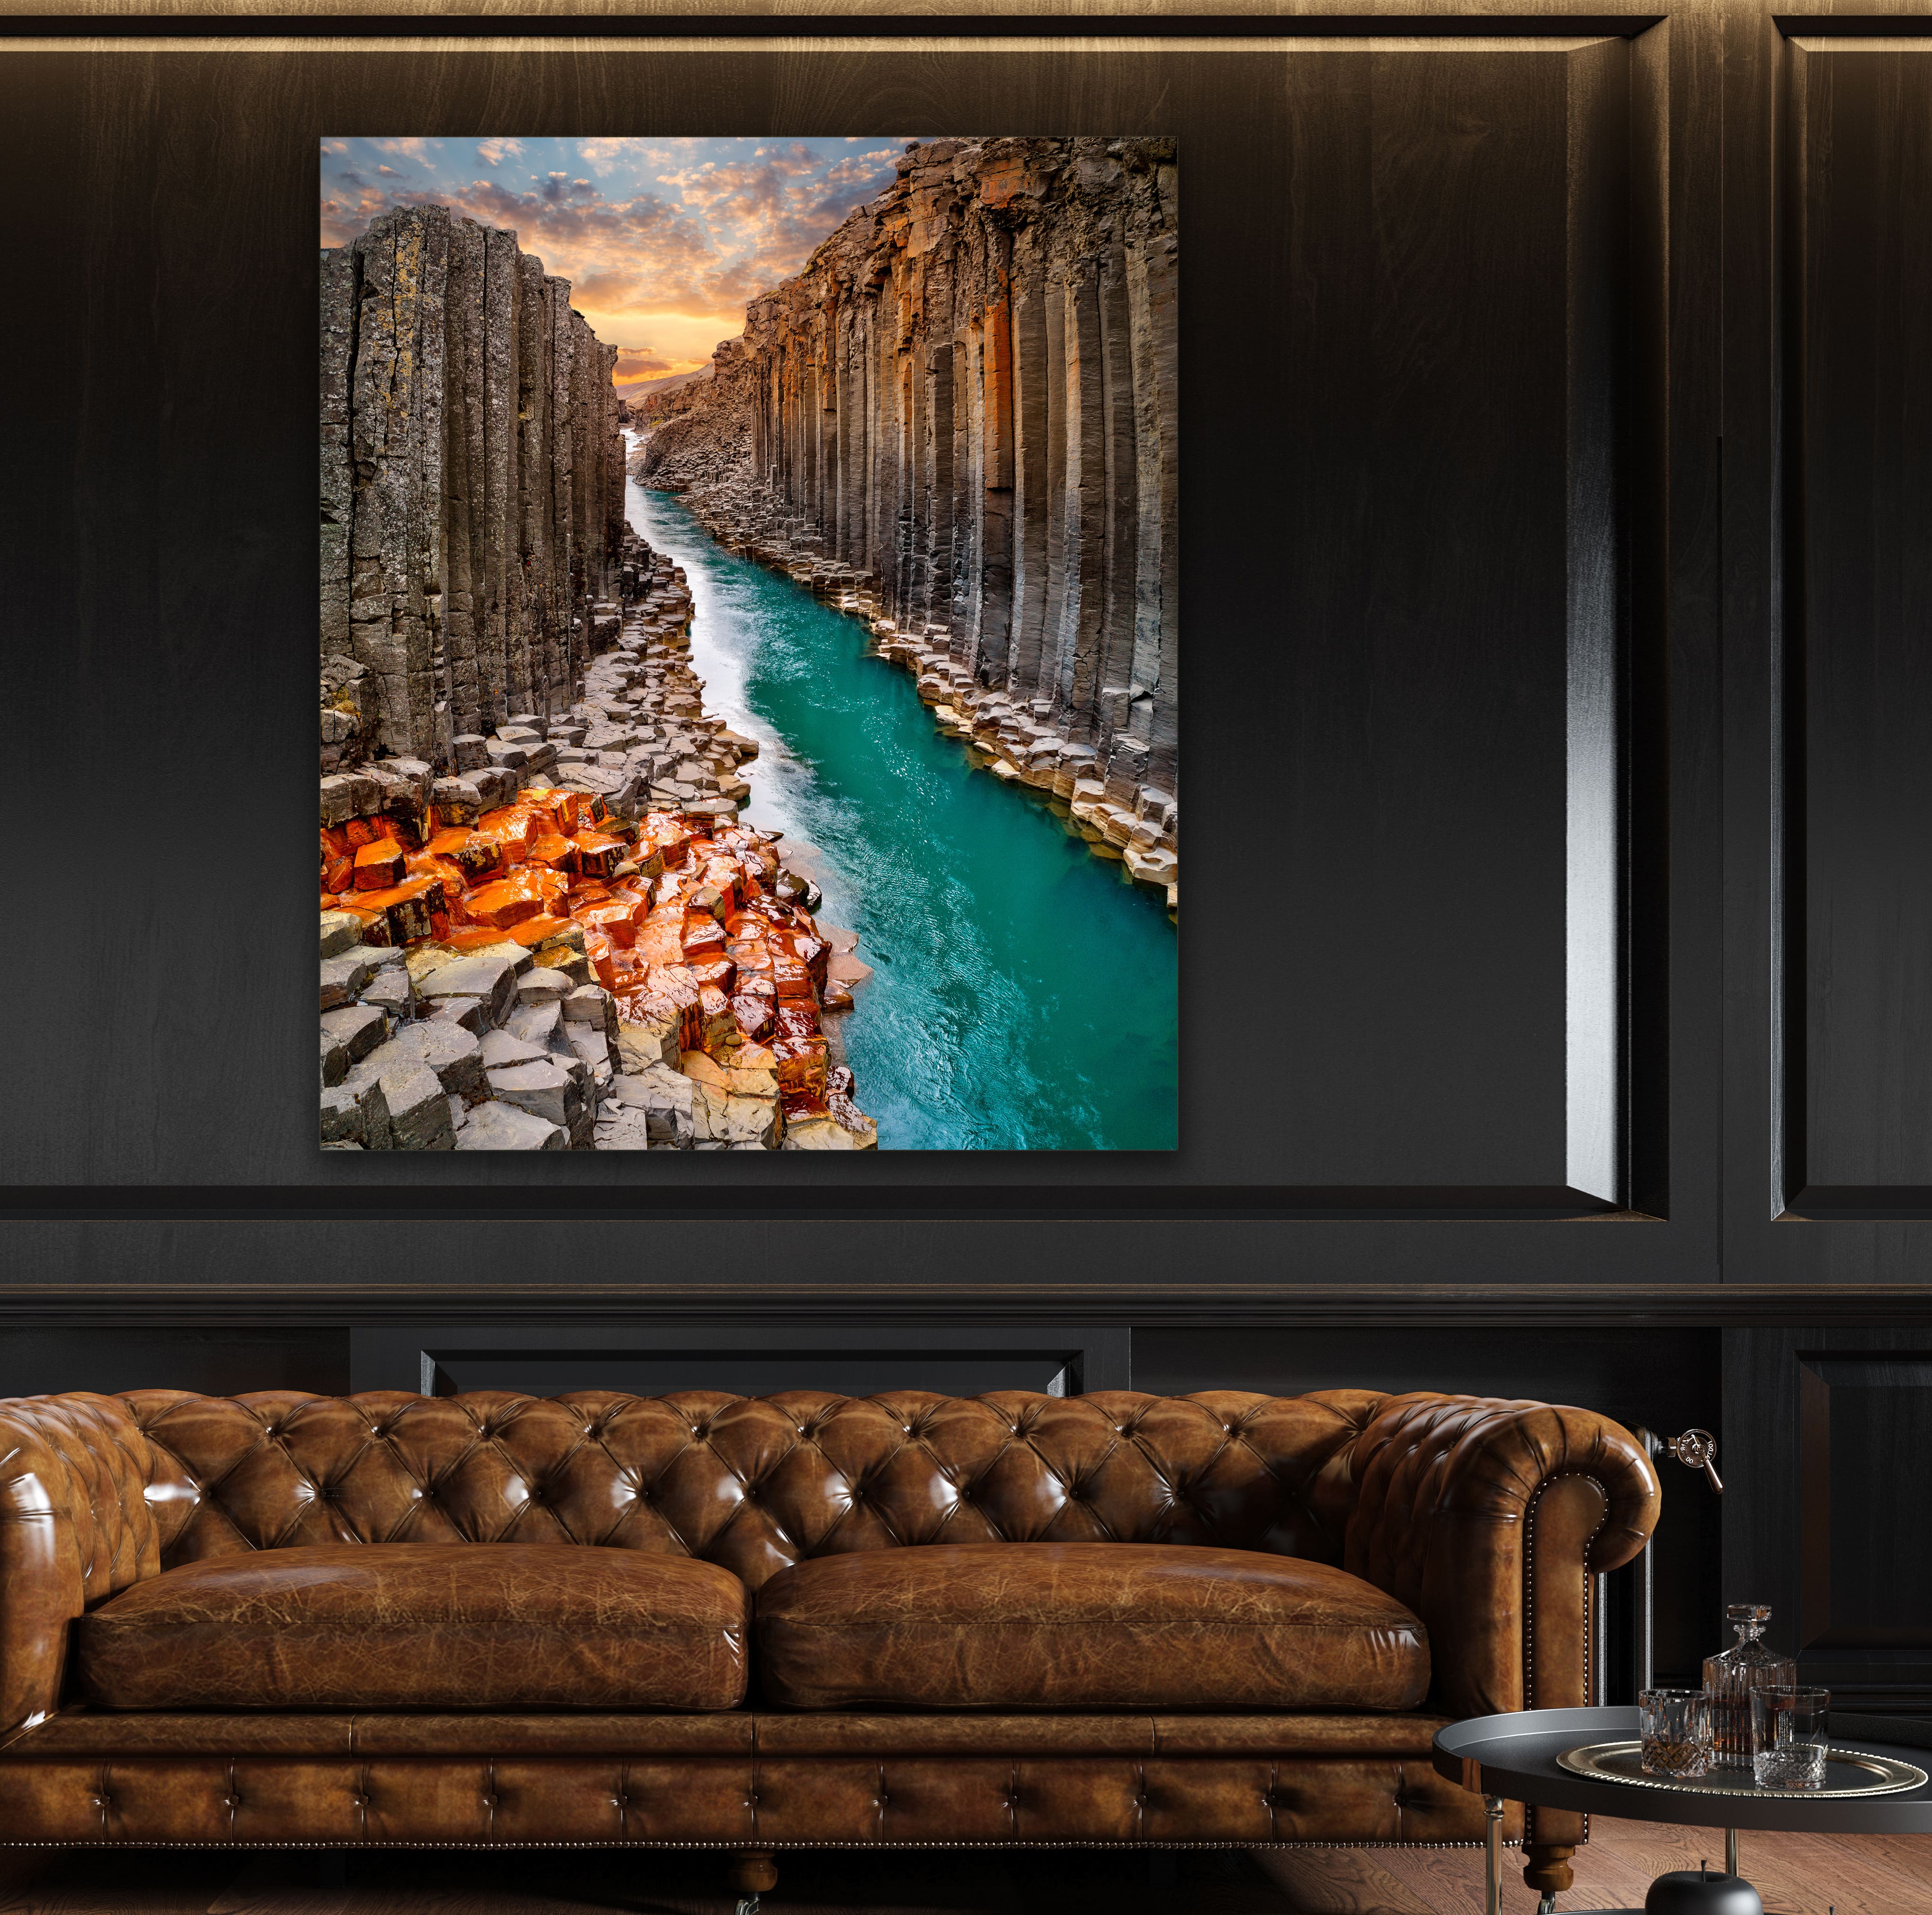 Wandbild Hochformat Titel: Canyon fantastische Landschaft - Bild Wanddeko Alu Dibond Leinwand Acrylglas Holzbalken Butlerfinish Poster 